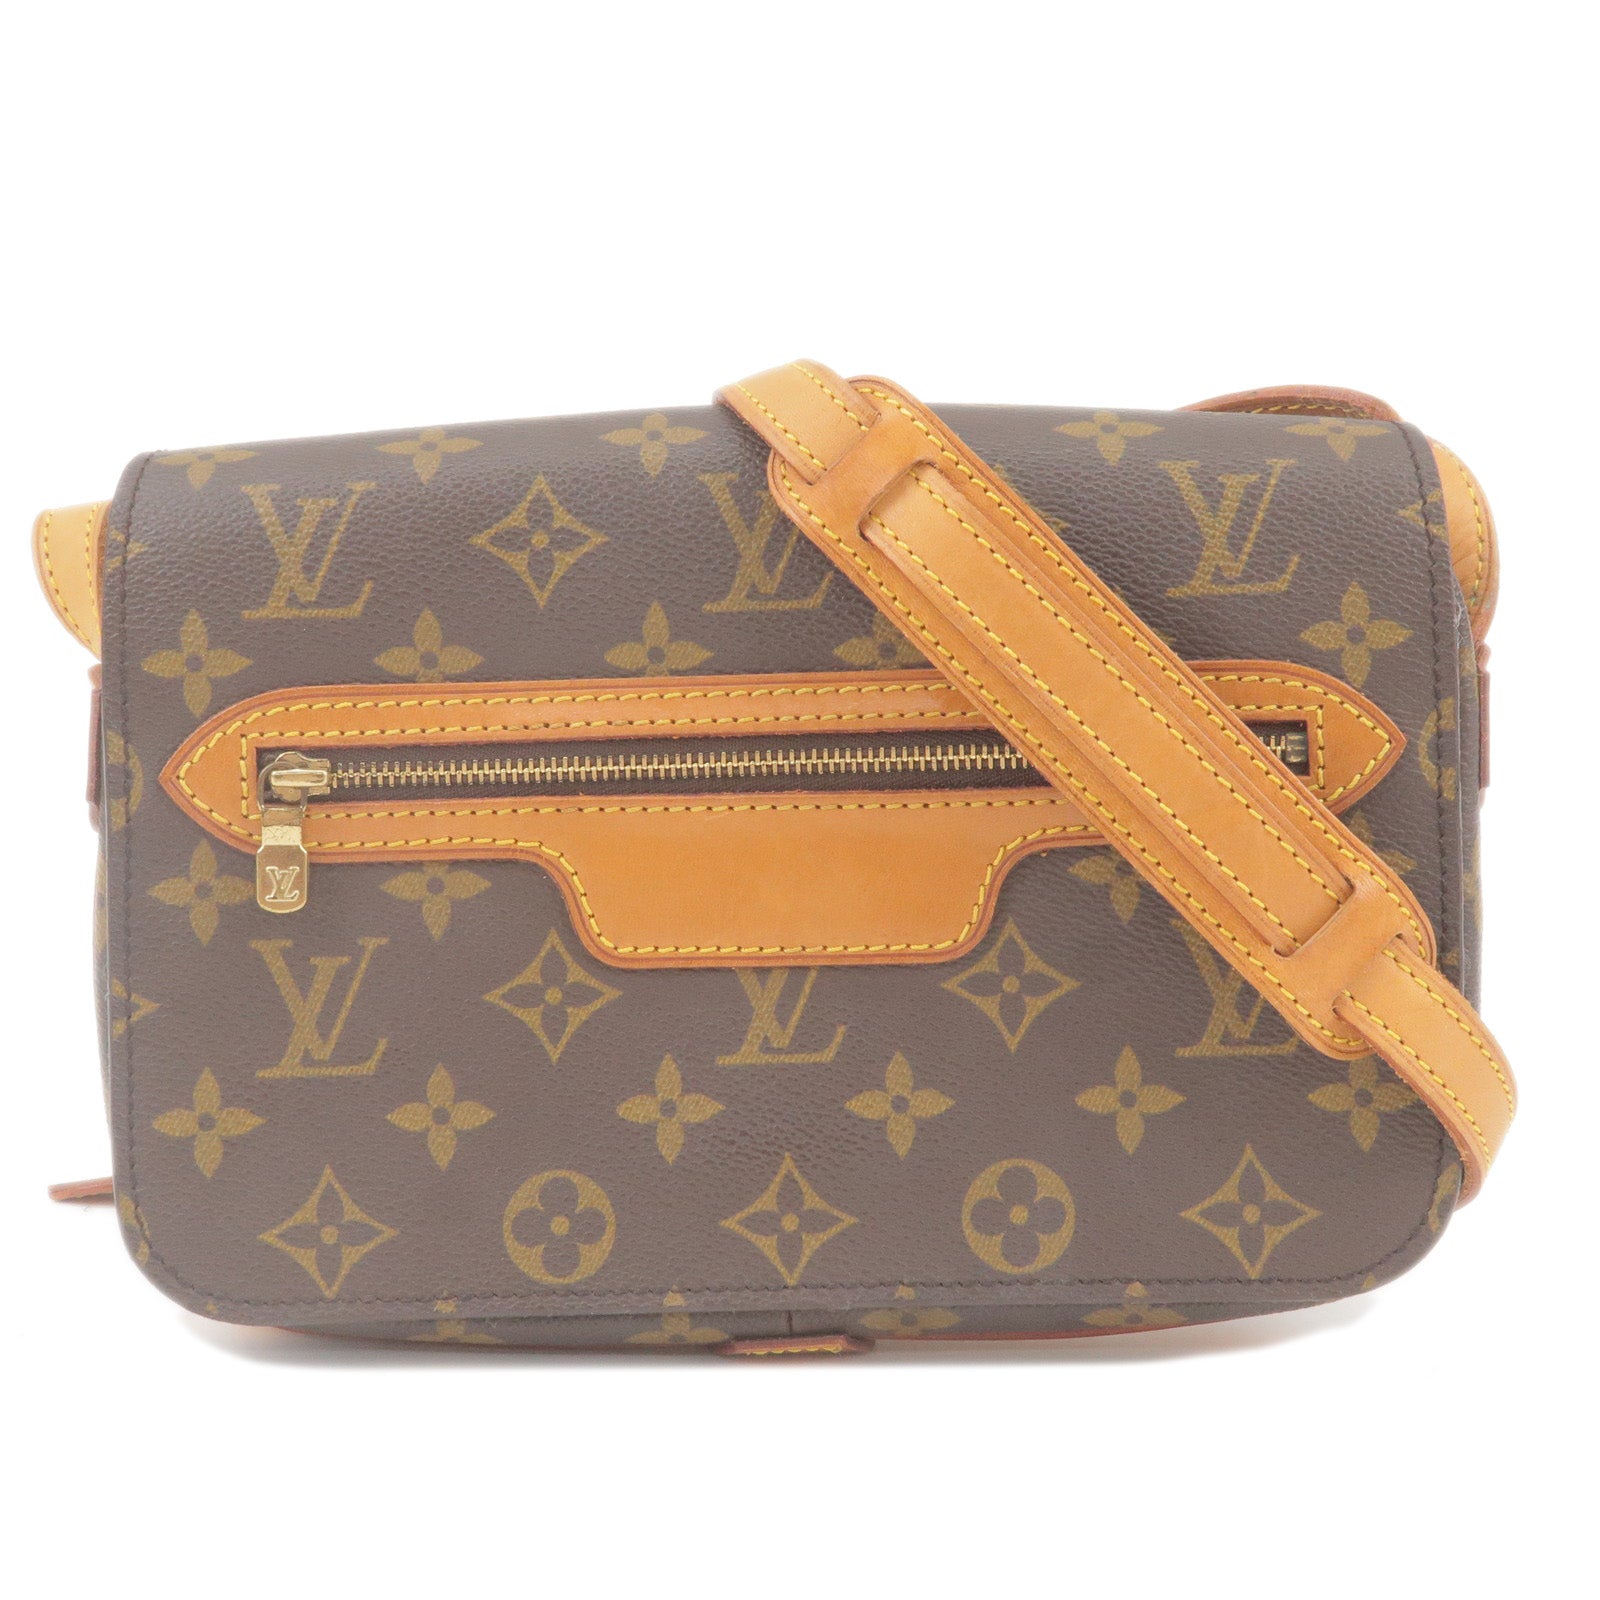 Louis Vuitton St. Germain Bag